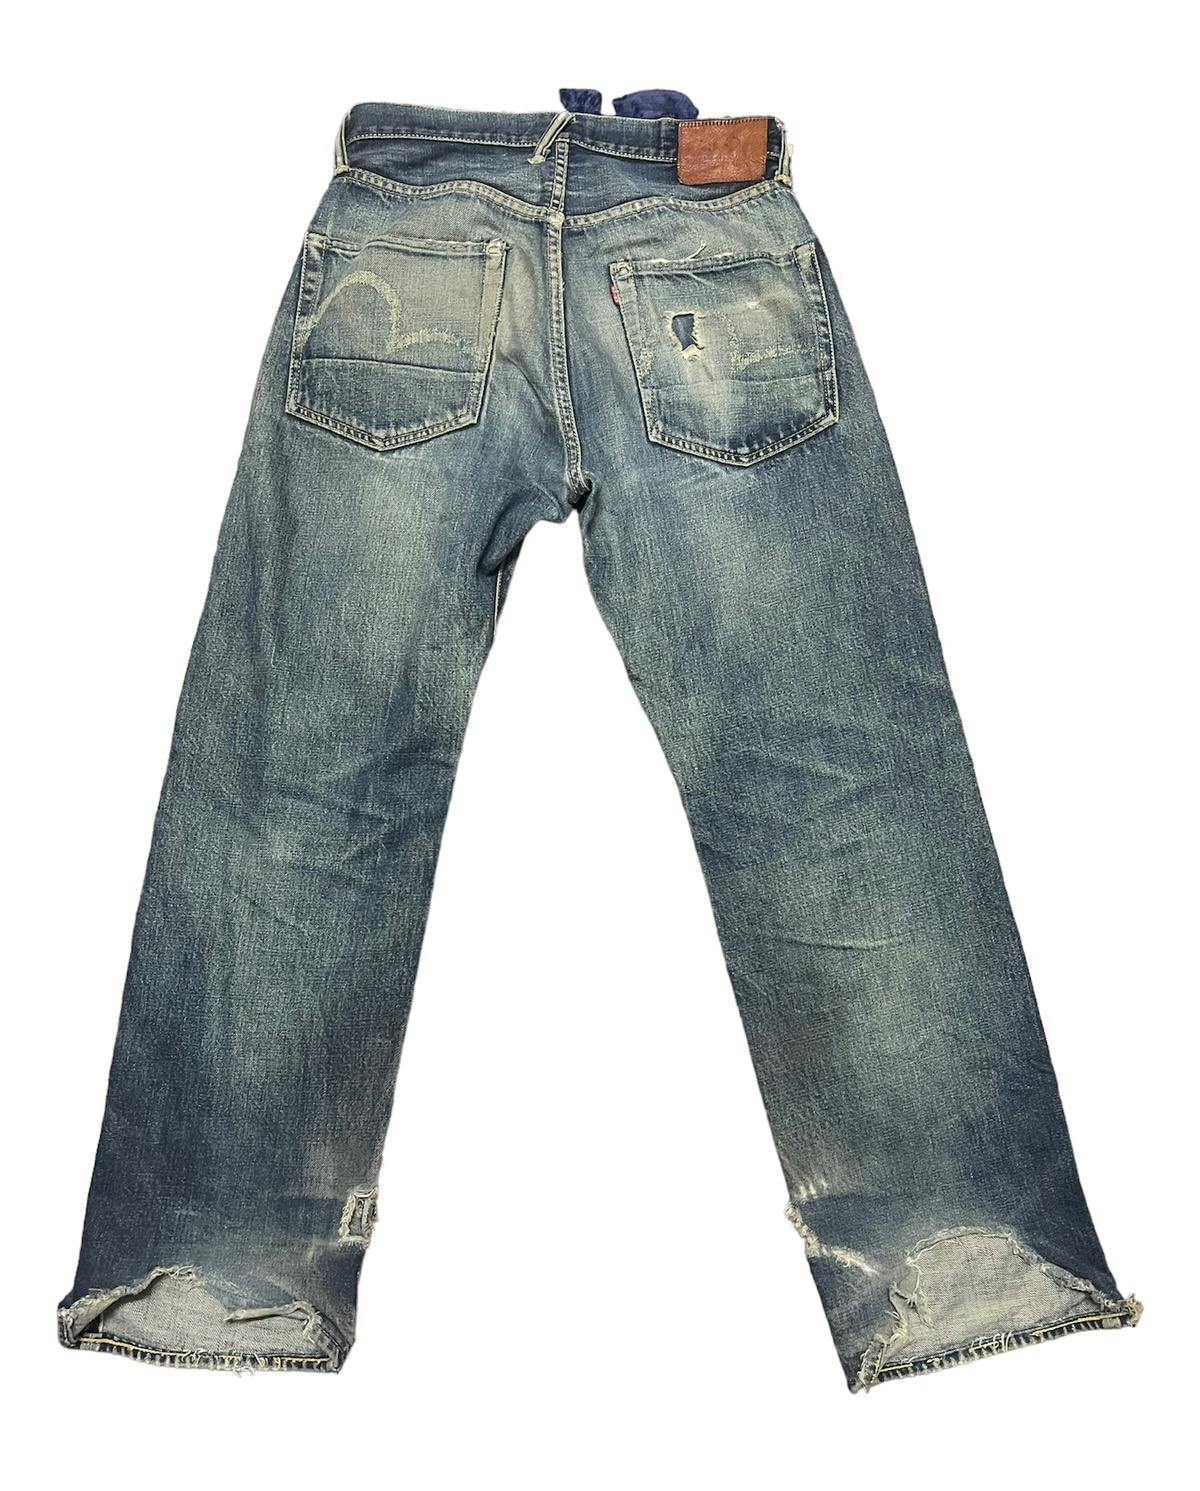 Evisu Denim distressed selvedge jeans - 2